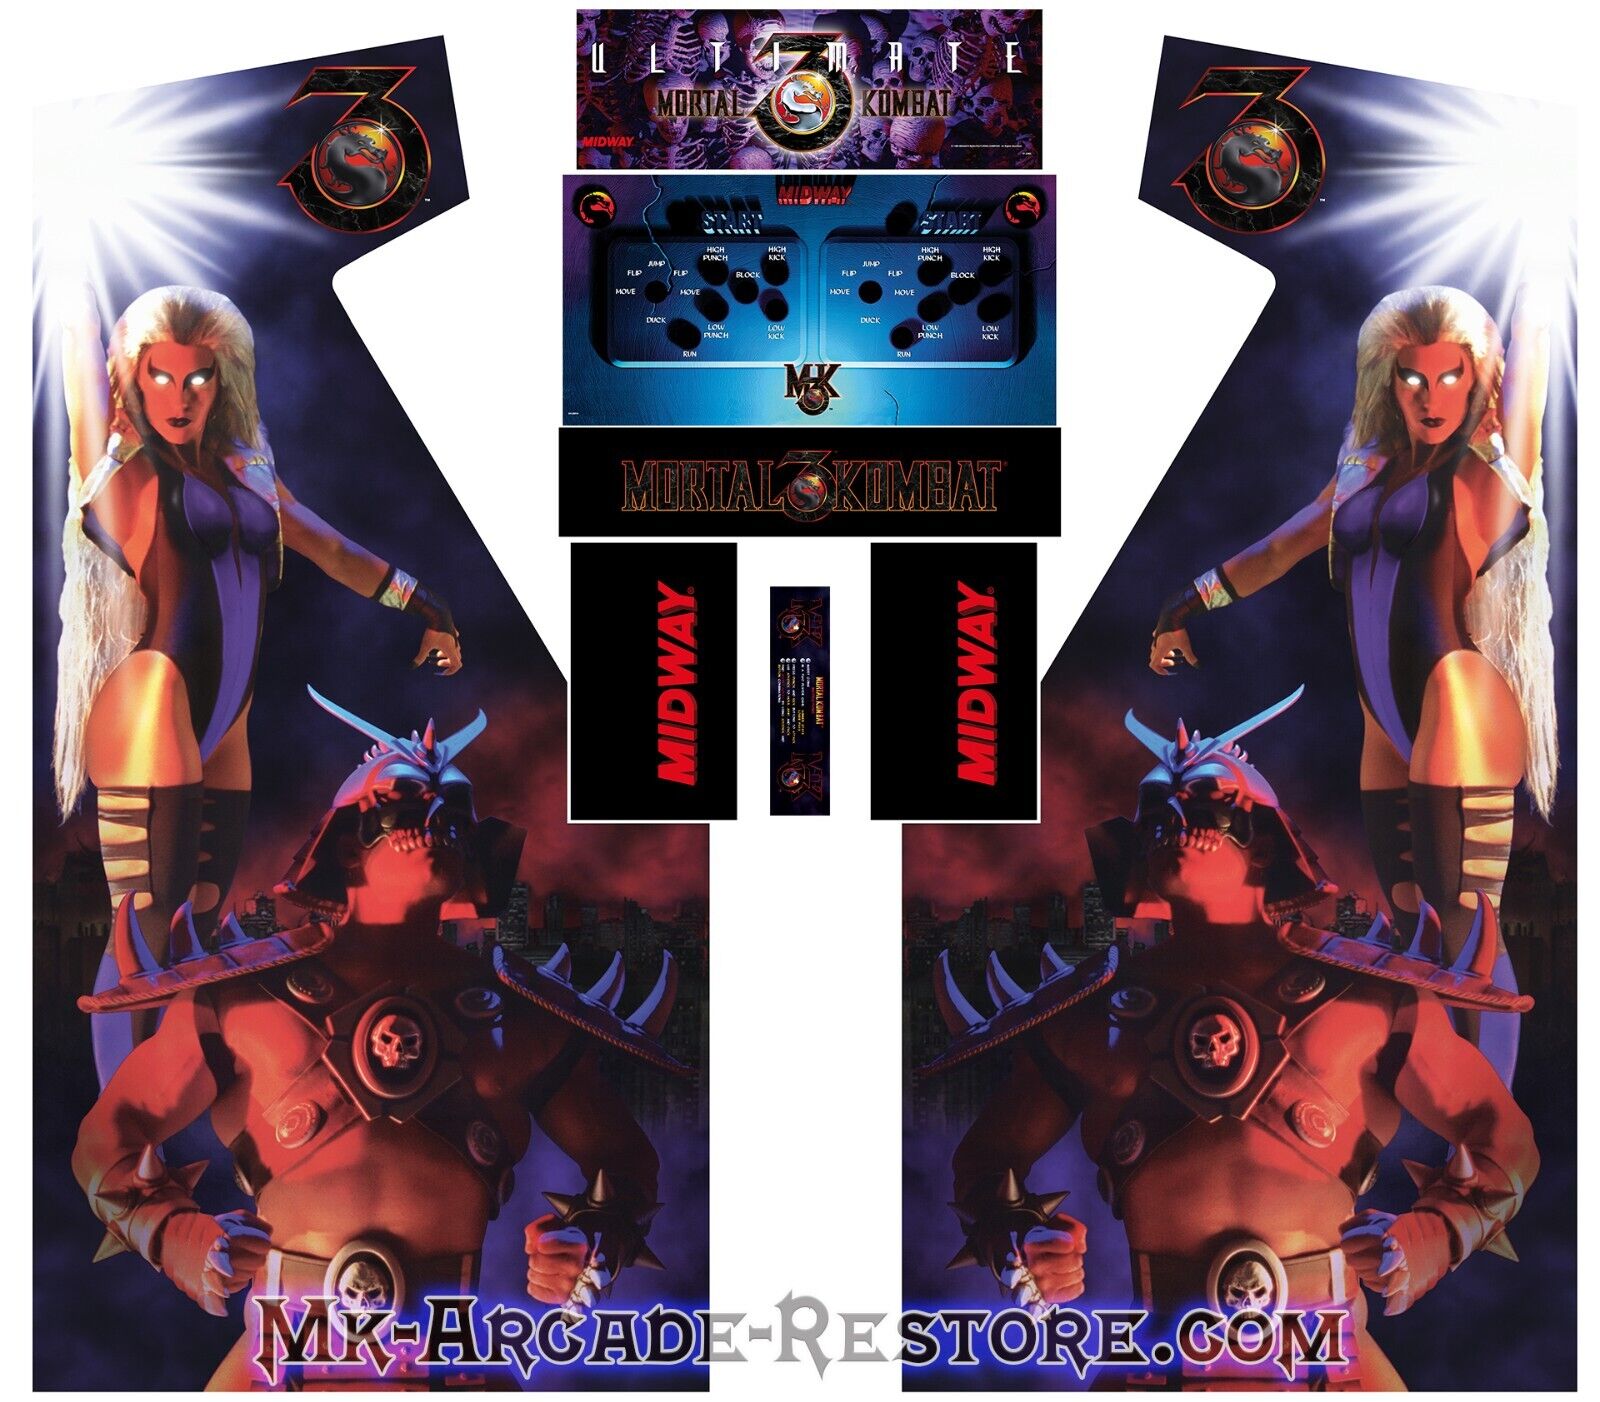 Mortal Kombat 3 UMK3 Side Art Arcade Cabinet Kit Artwork Graphics Decals Print